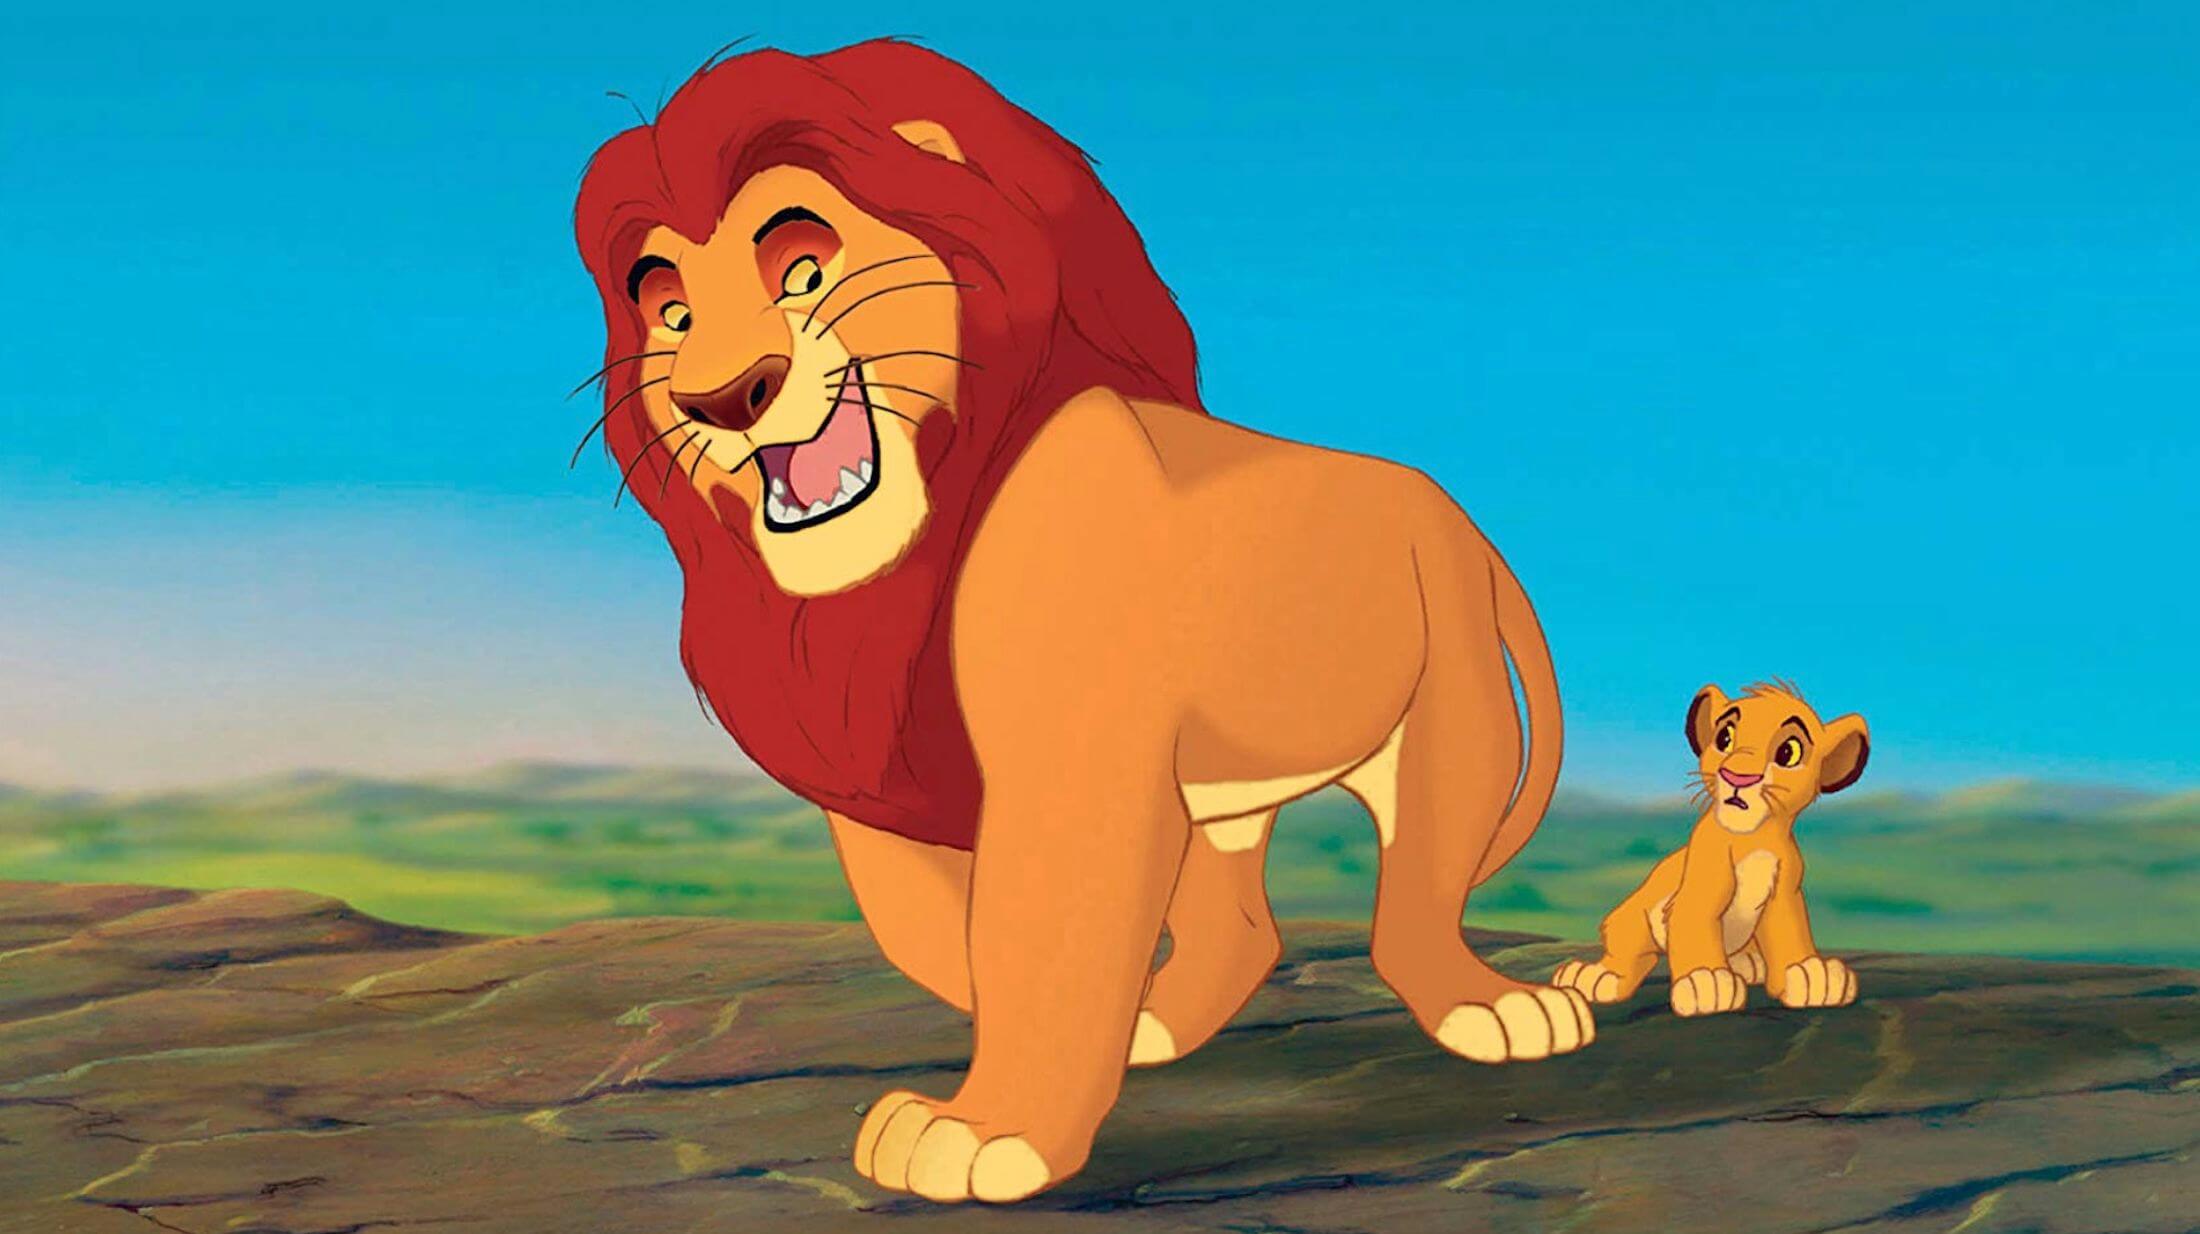 Animated sad movie The Lion King